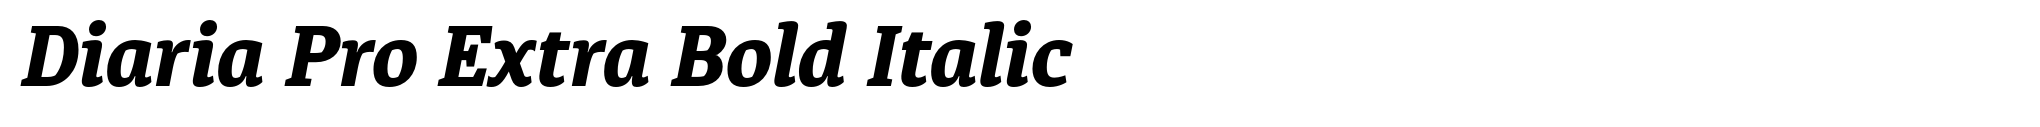 Diaria Pro Extra Bold Italic image